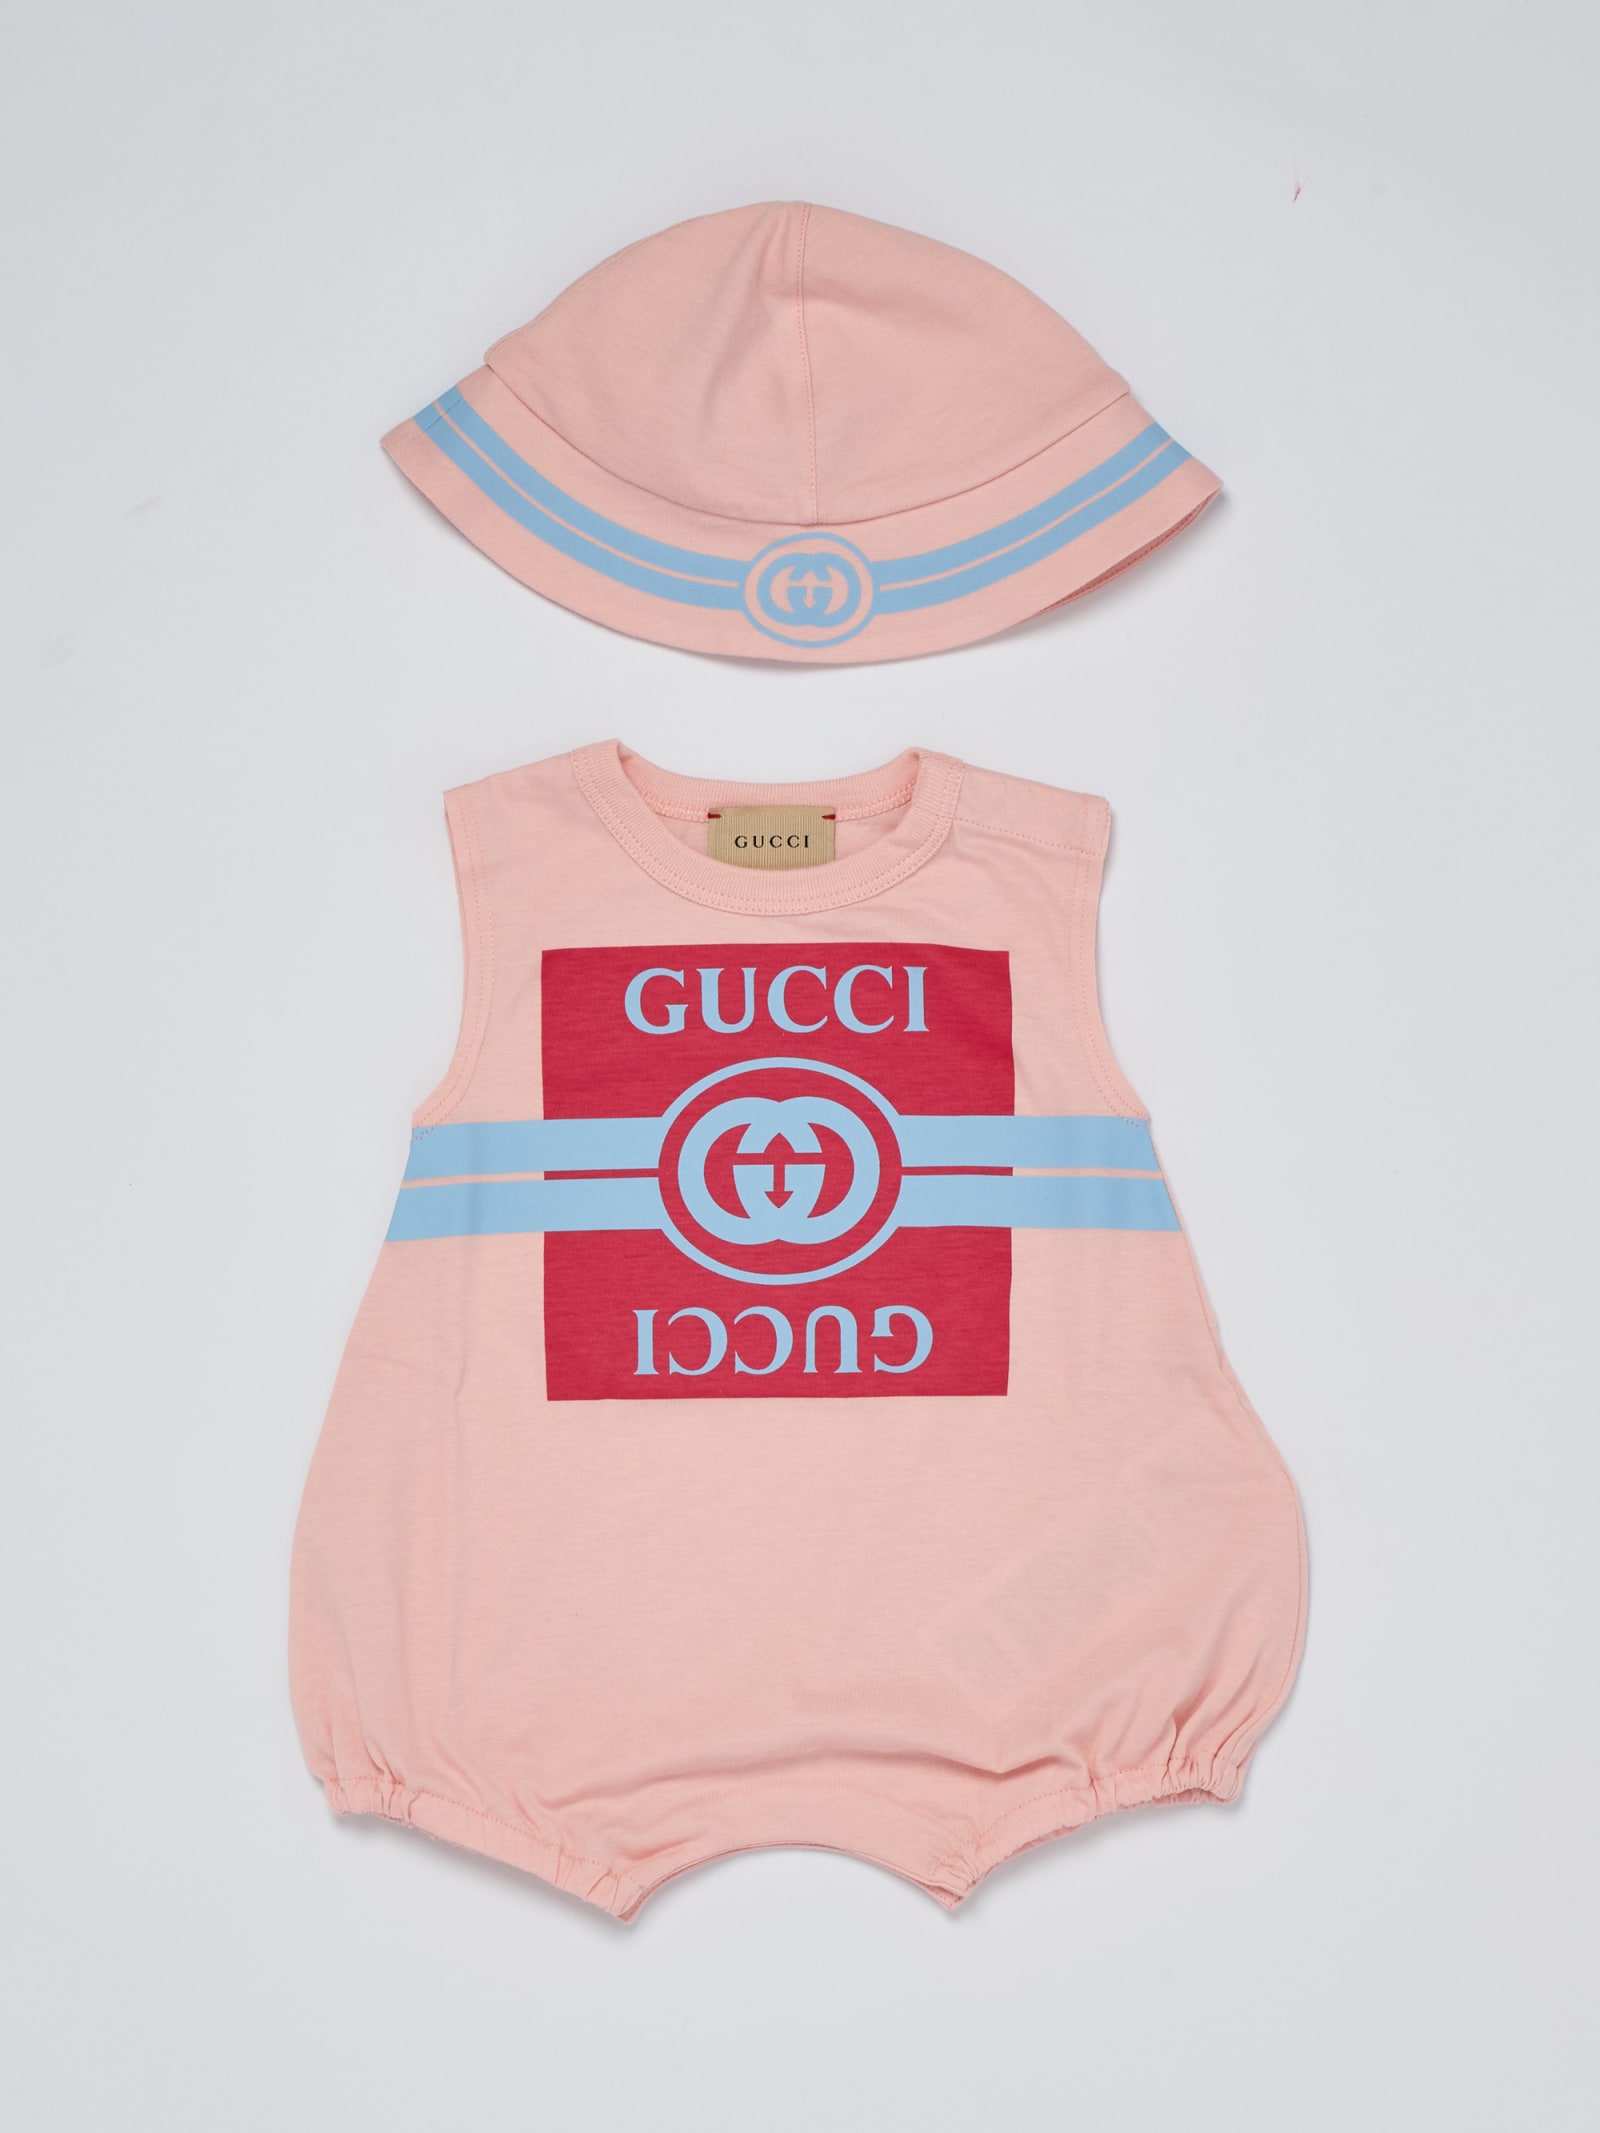 Gucci Babies' Gift Set Suit In Rosa-celeste